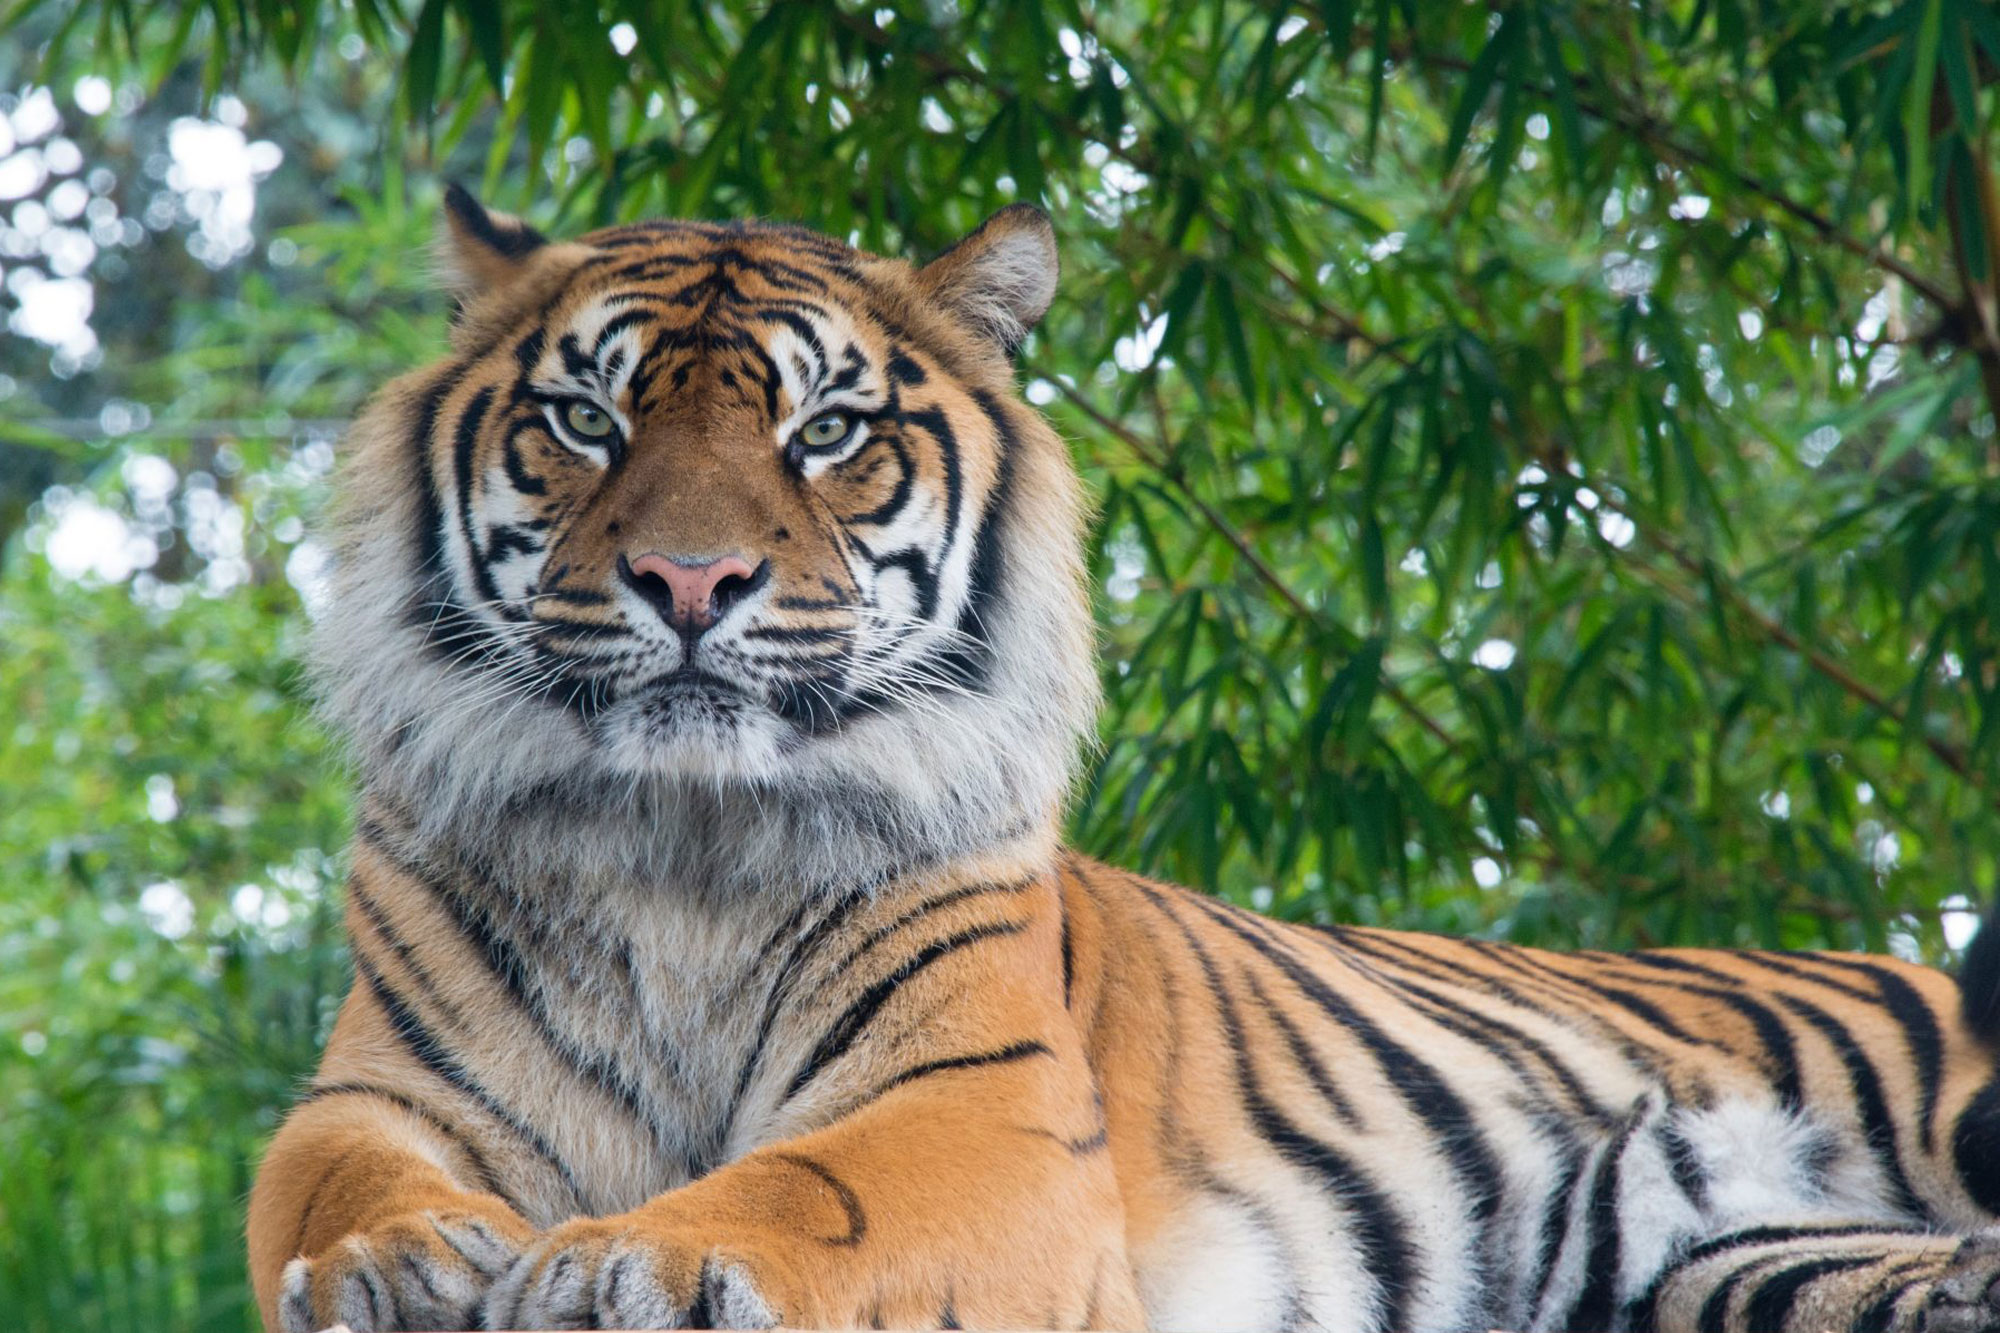 Striped tiger, a flagship species